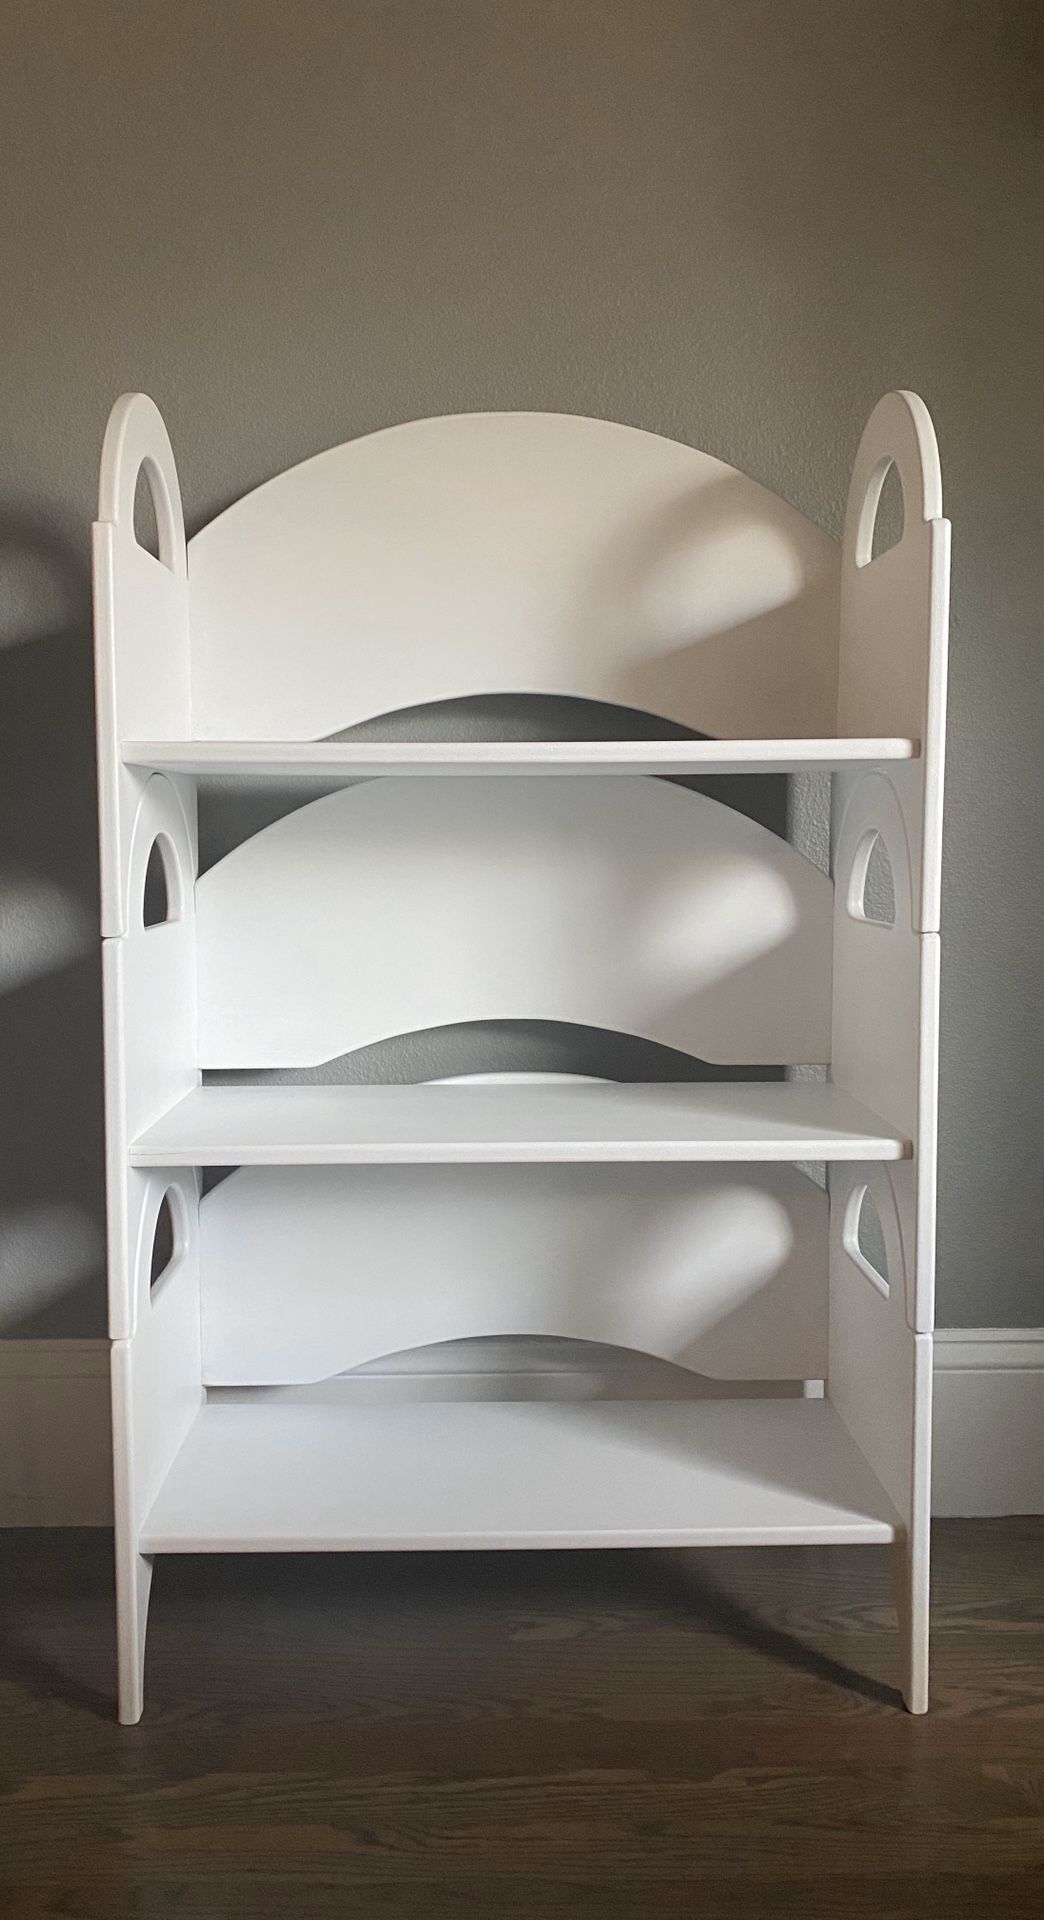 3 Tier Stackable Book Shelf / Benches.